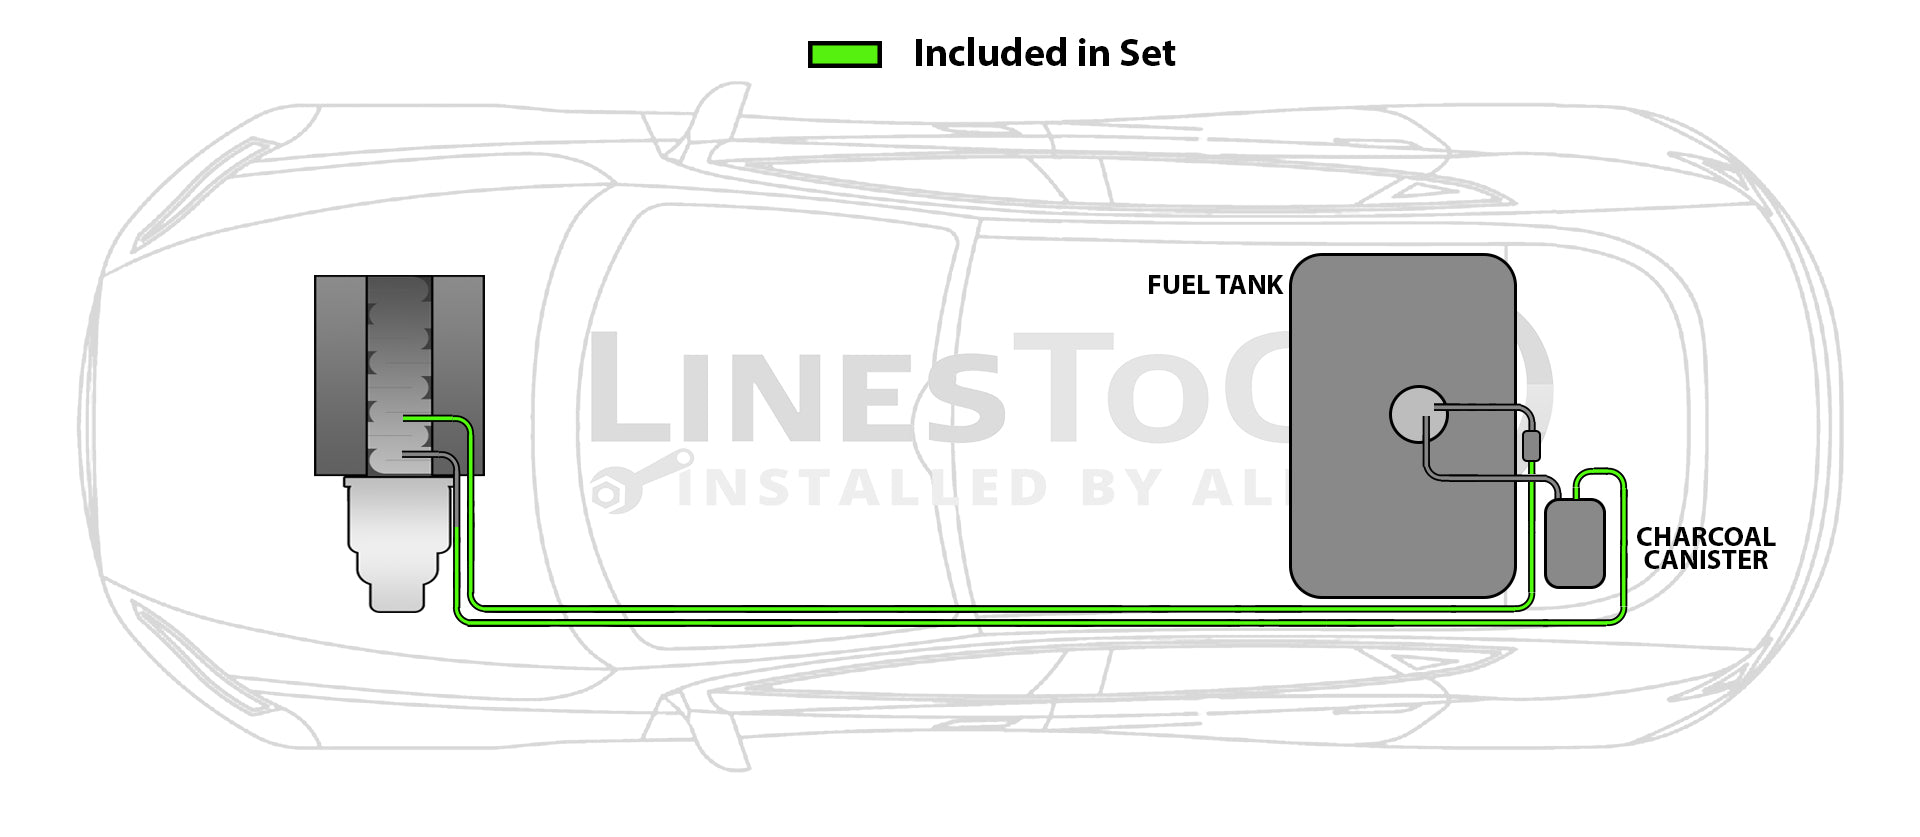 Pontiac G5 Fuel Line Set 2008 2.4L FL255-A3J